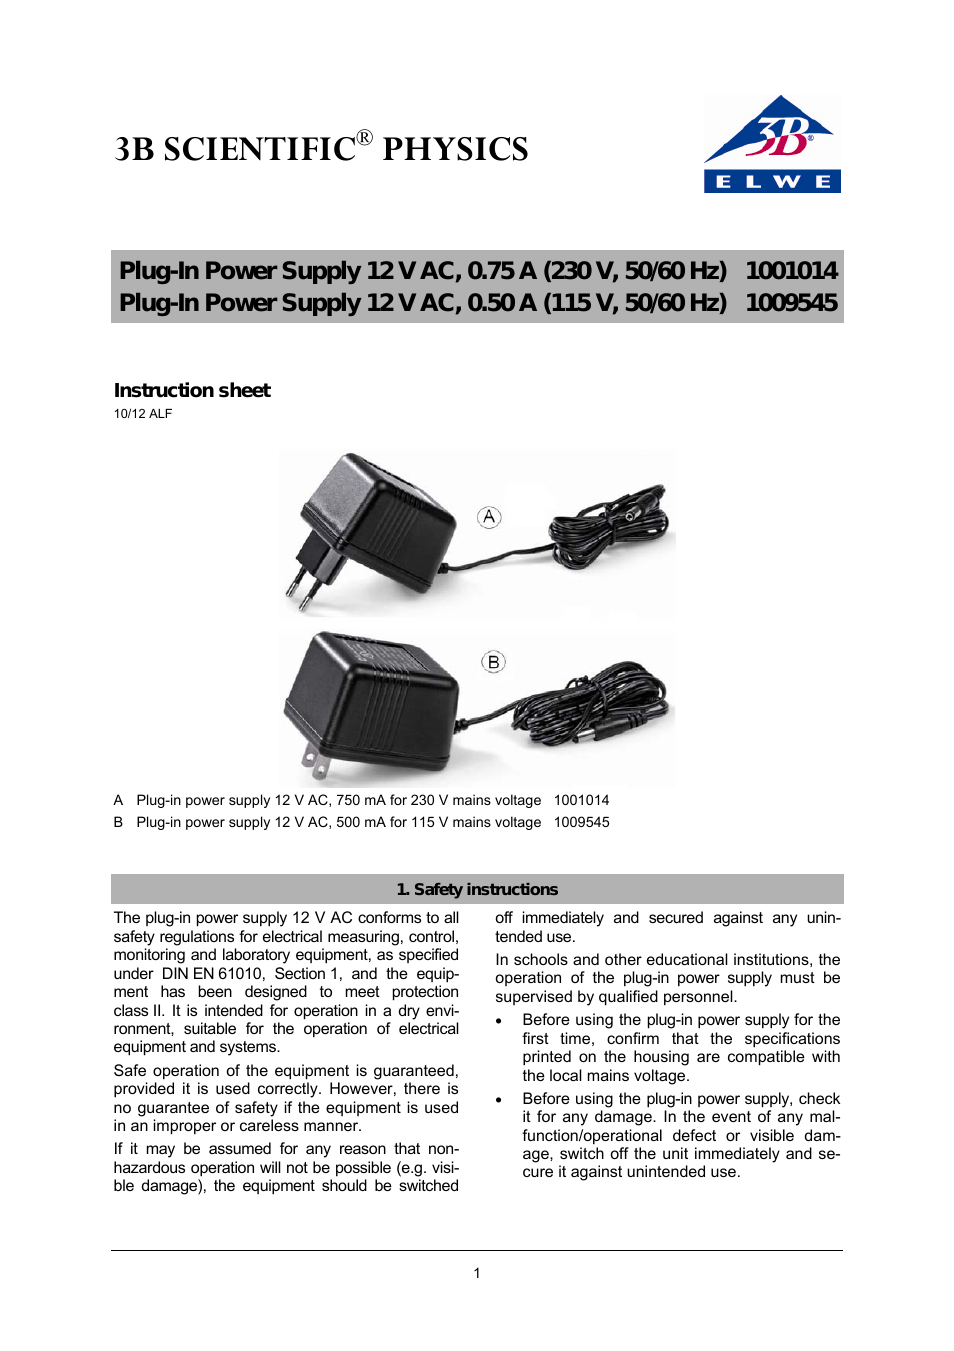 AC Plug-In Power Supply 12 V, 500 mA (115 V, 50__60 Hz)